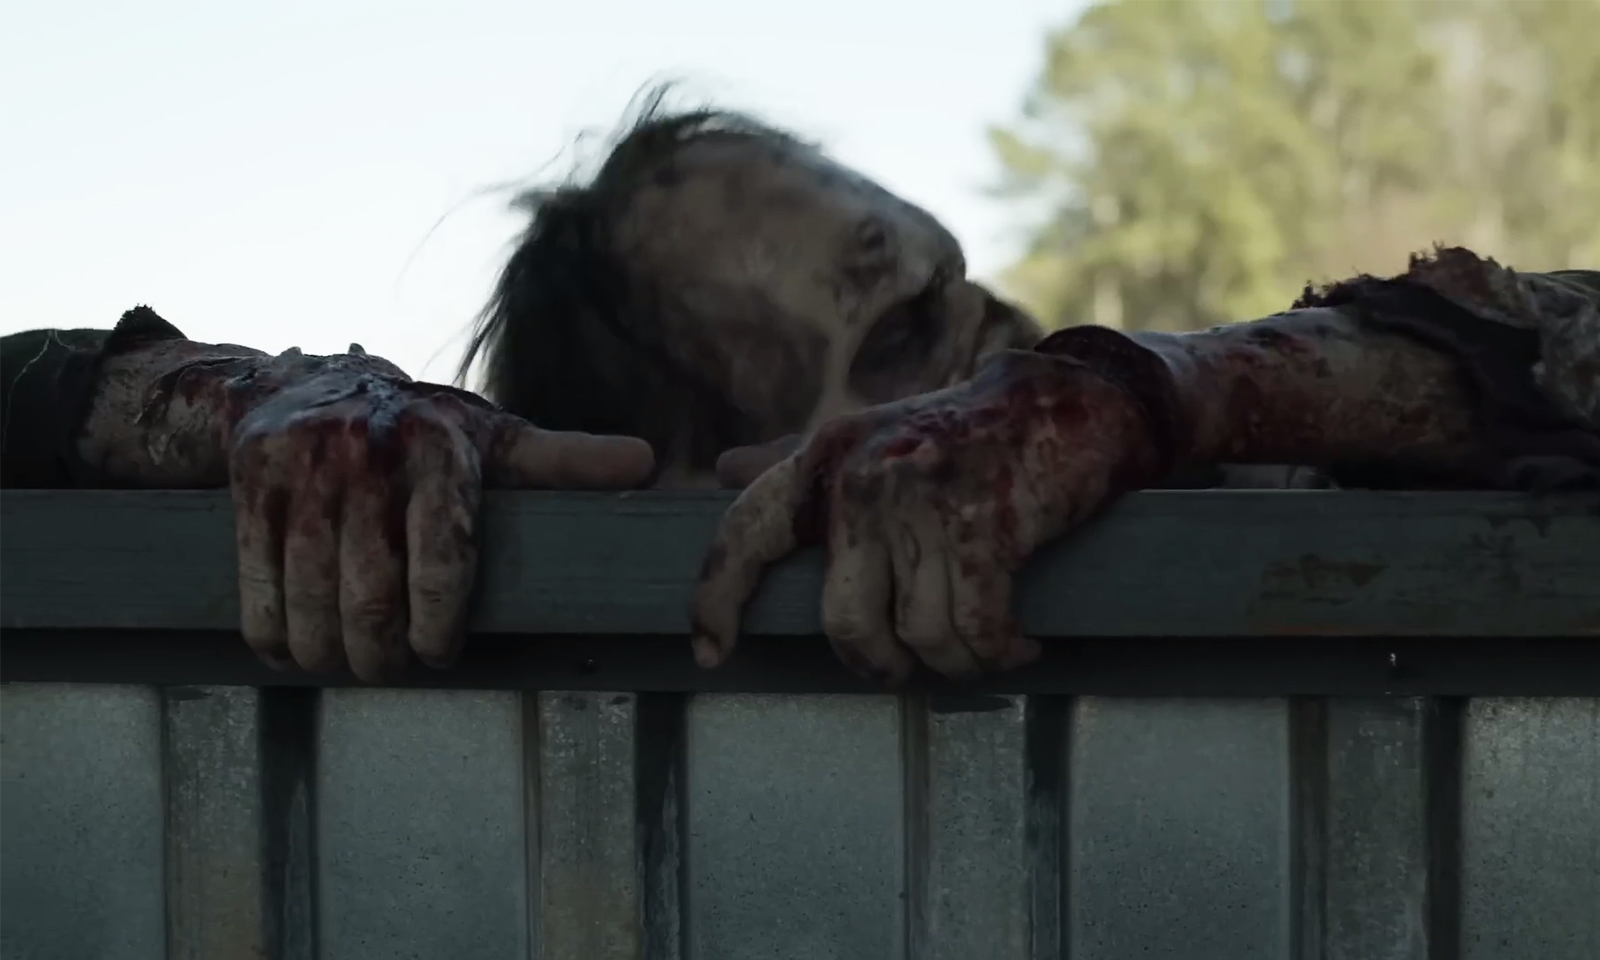 Walker variante escalando muro em cena do trailer dos últimos episódios de The Walking Dead.